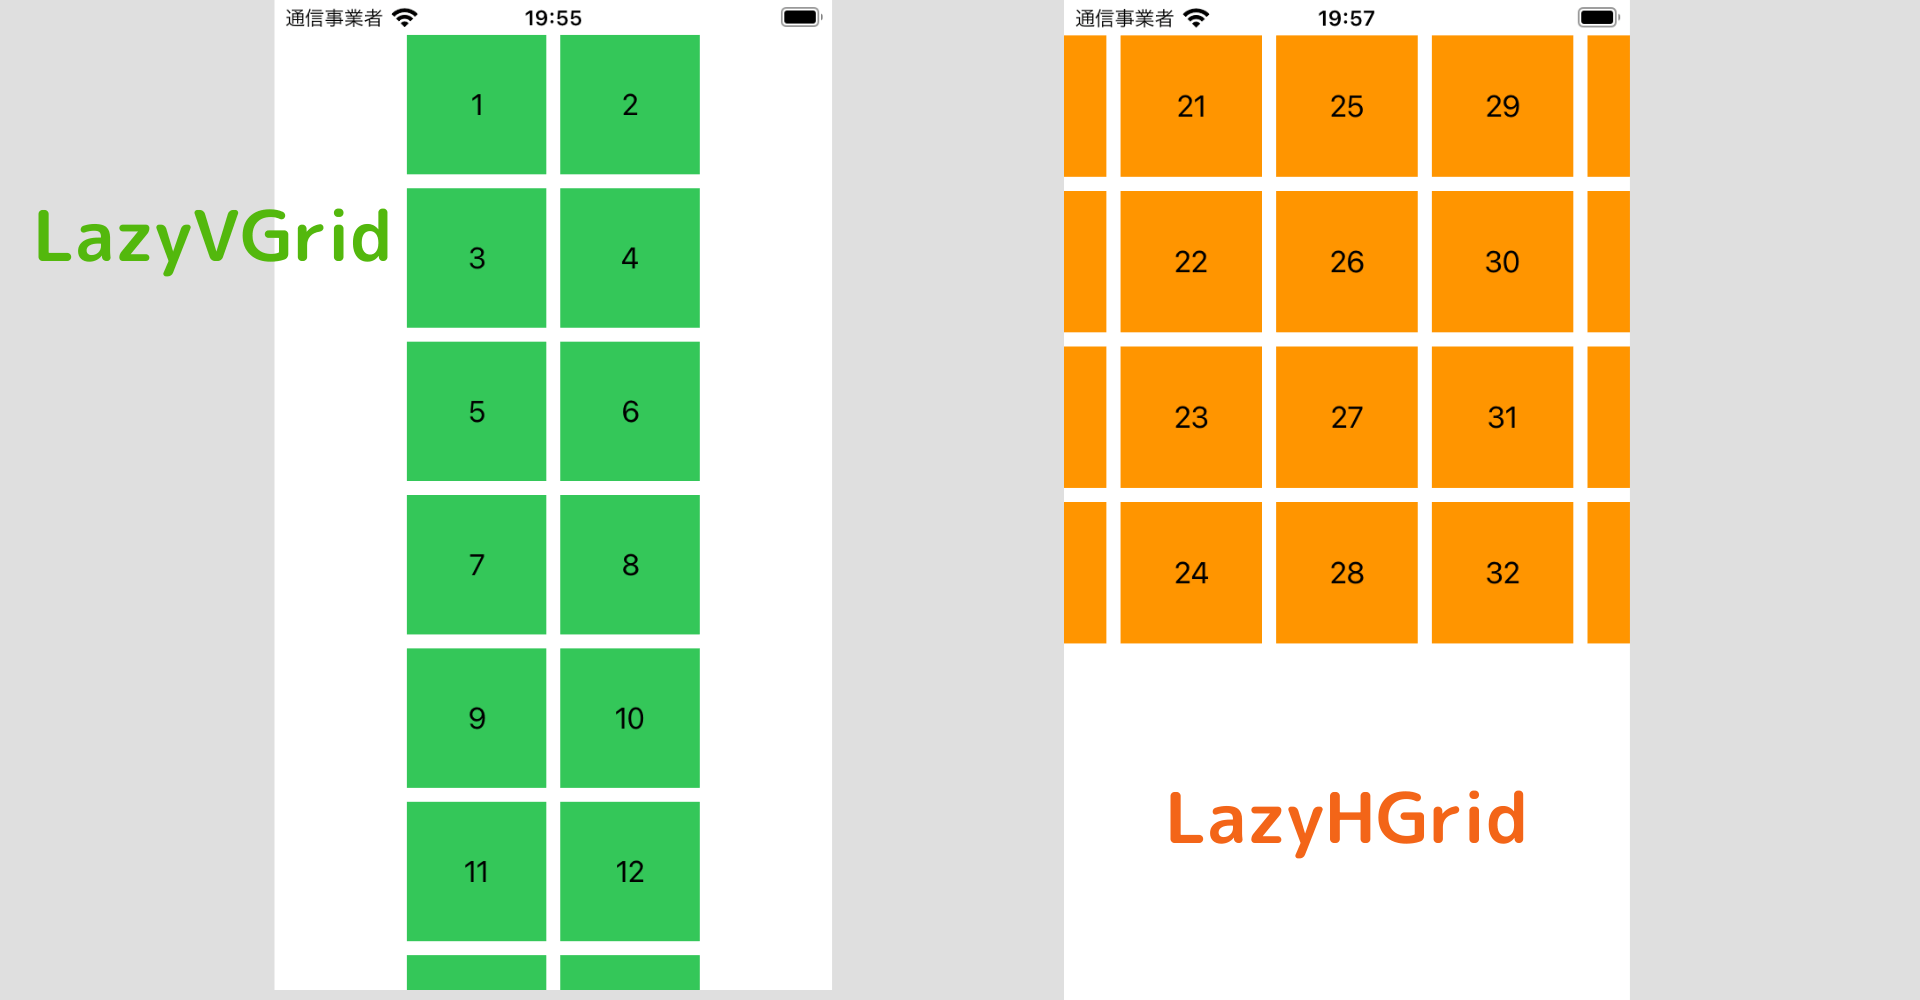 LazyHGridとLazyVGridを使って
グリッドレイアウトを実装したスクリーンショット